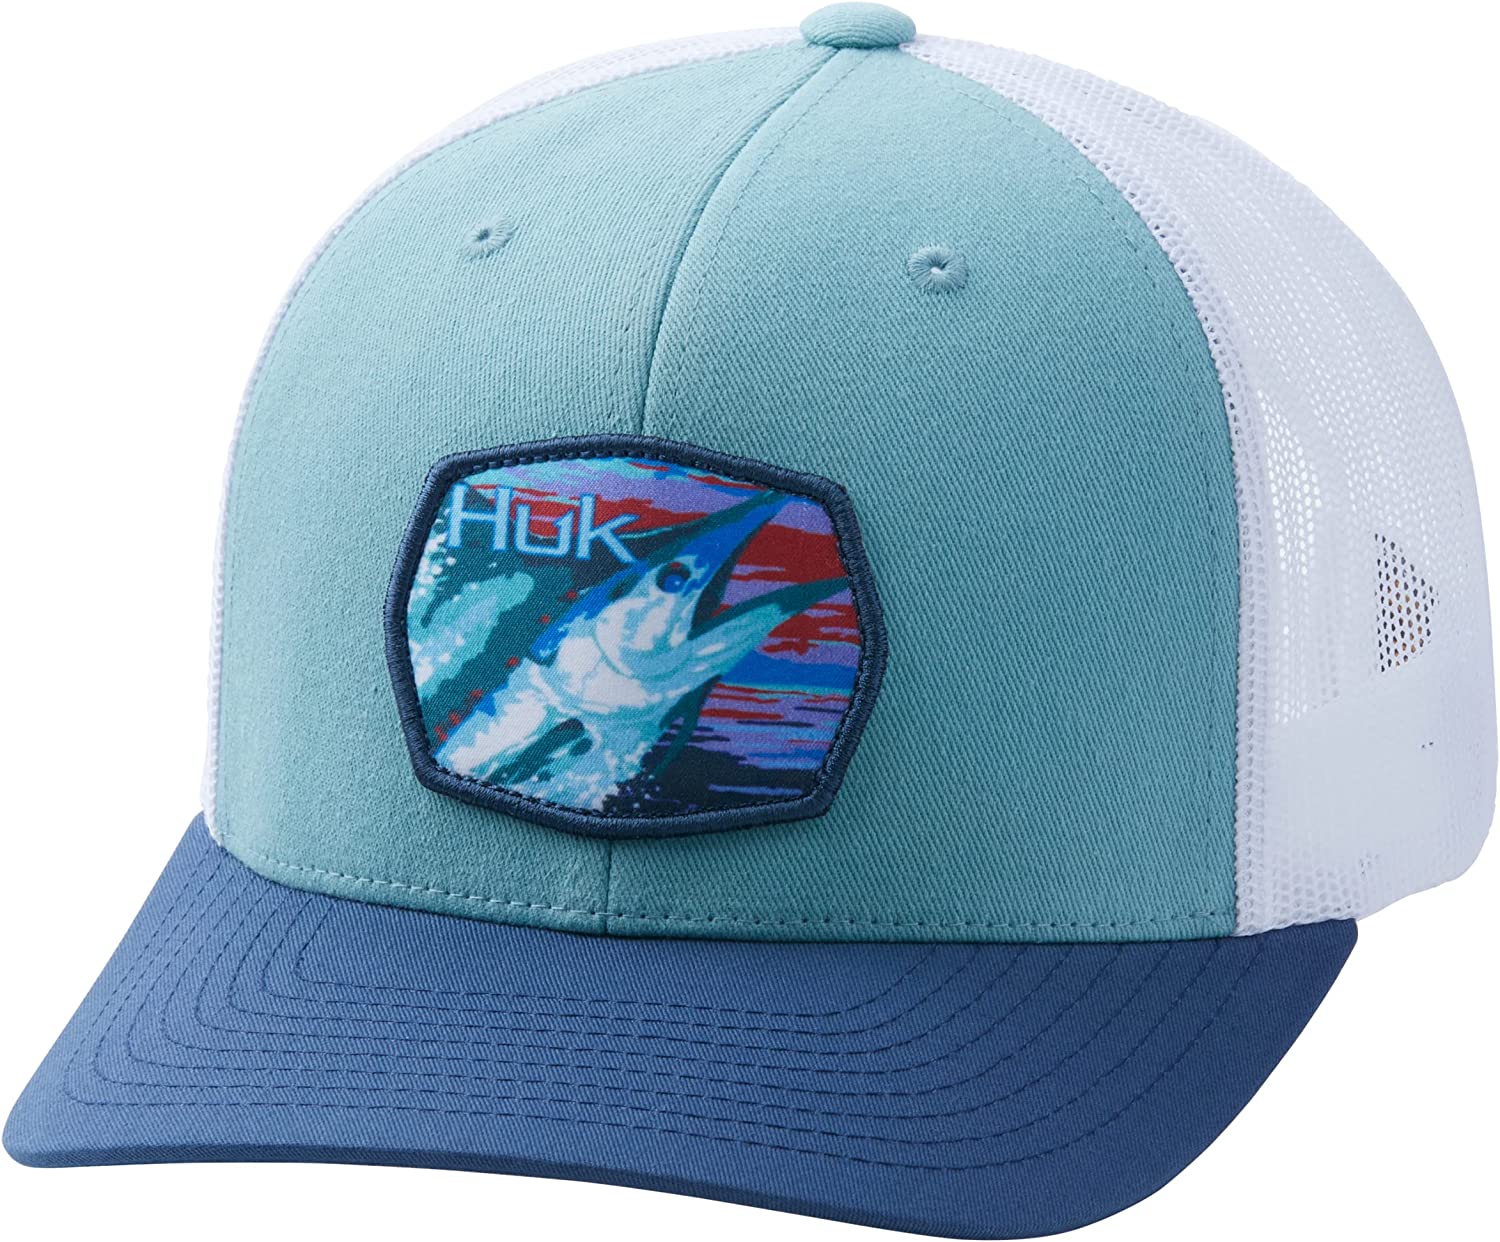 Huk Men's Anti-glare Snapback Trucker Mesh Fishing Hat - Oyster : Target